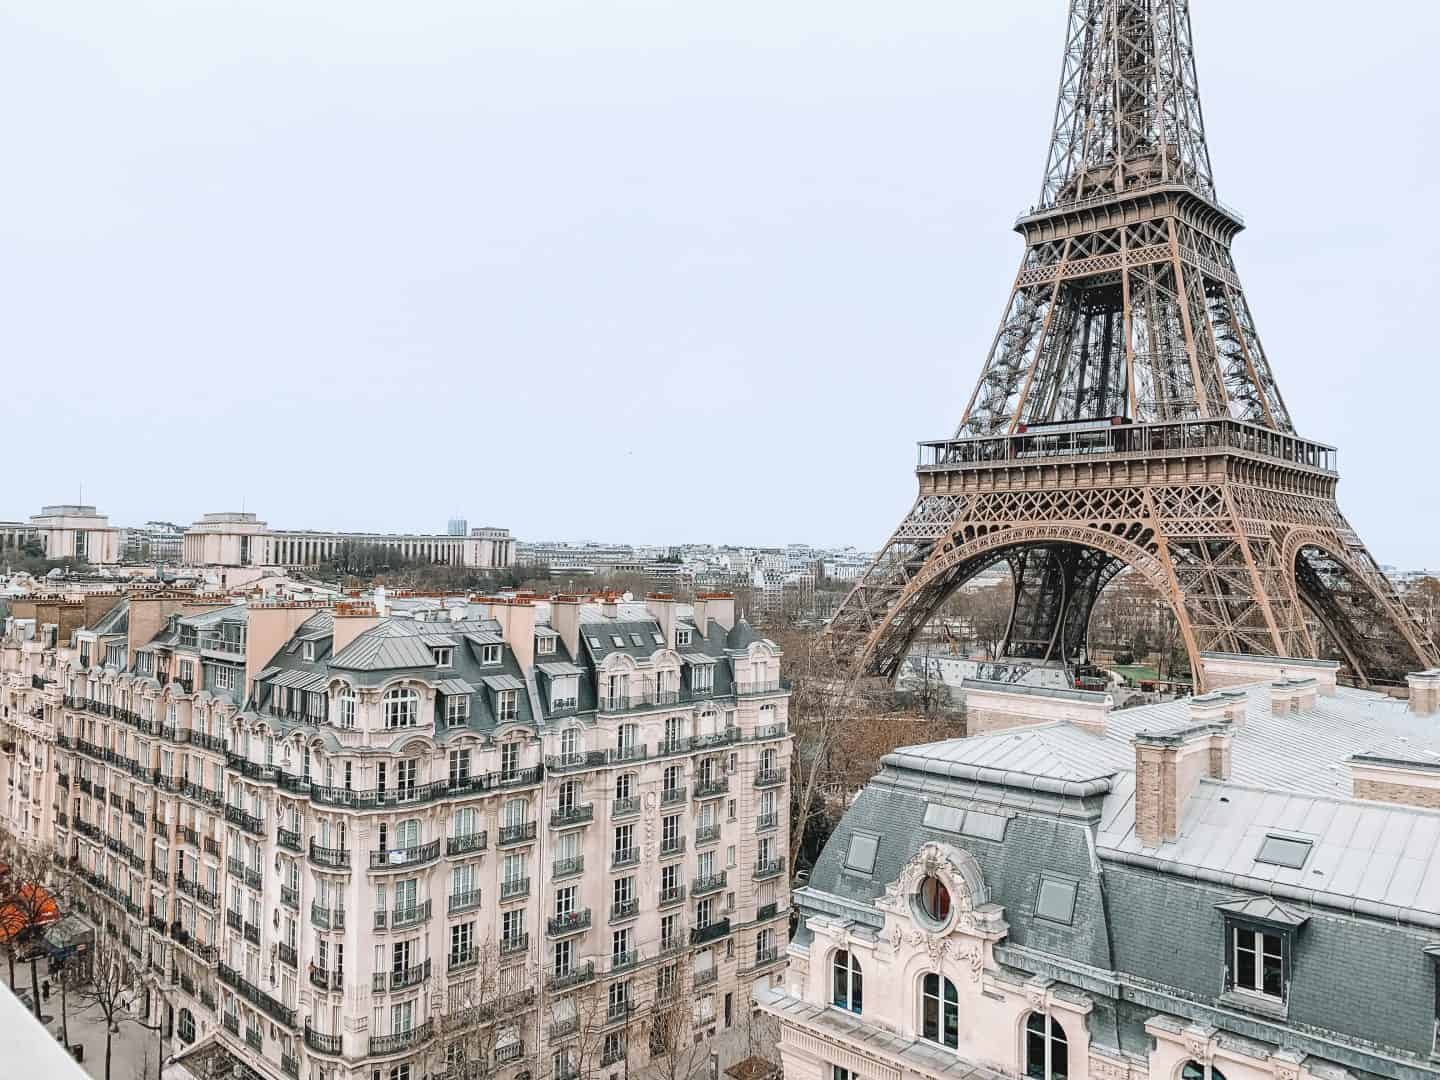 Classic Parisian Haussmann buildings